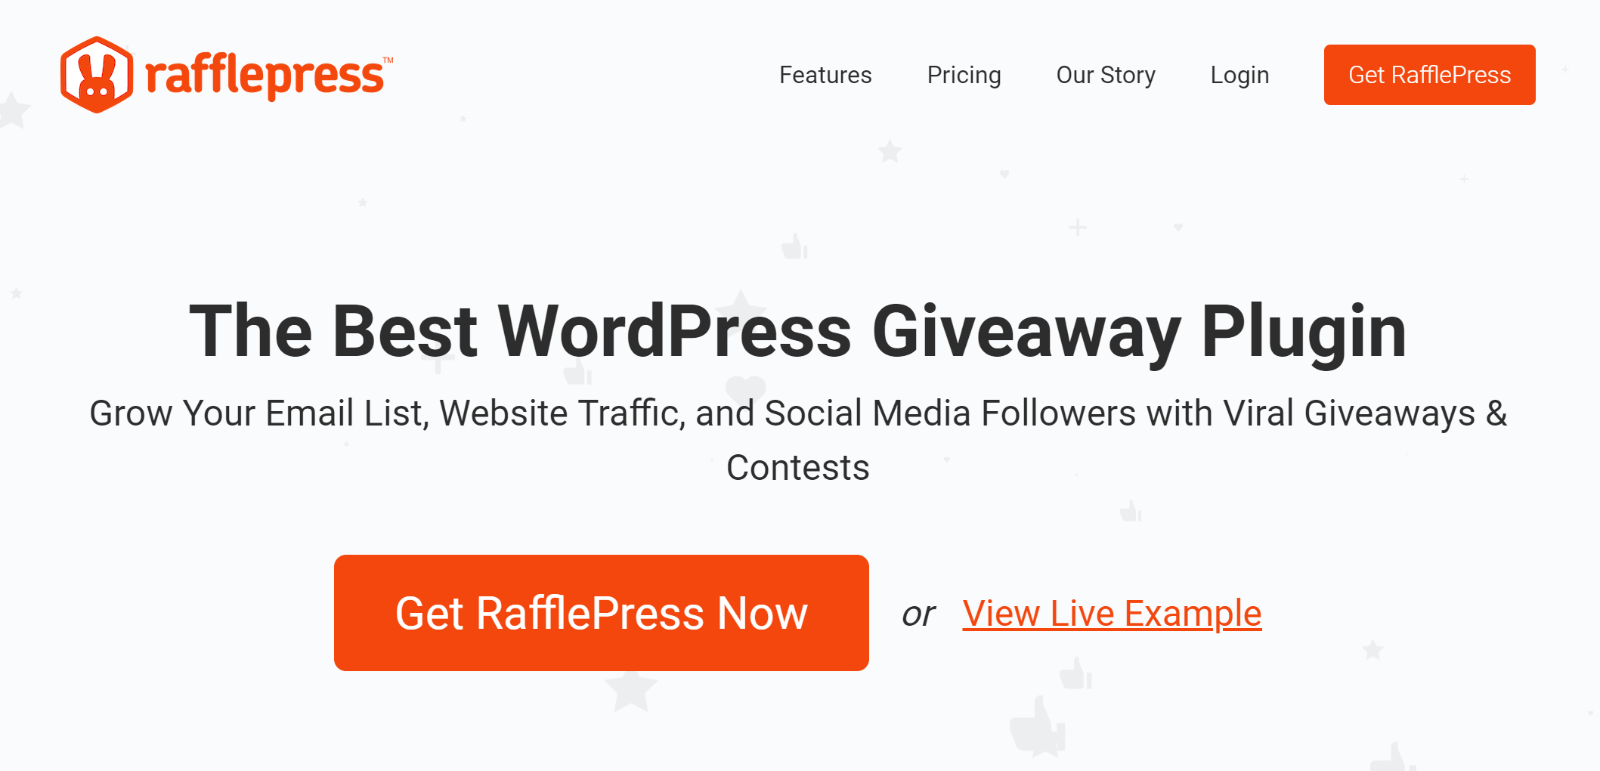 The RafflePress homepage